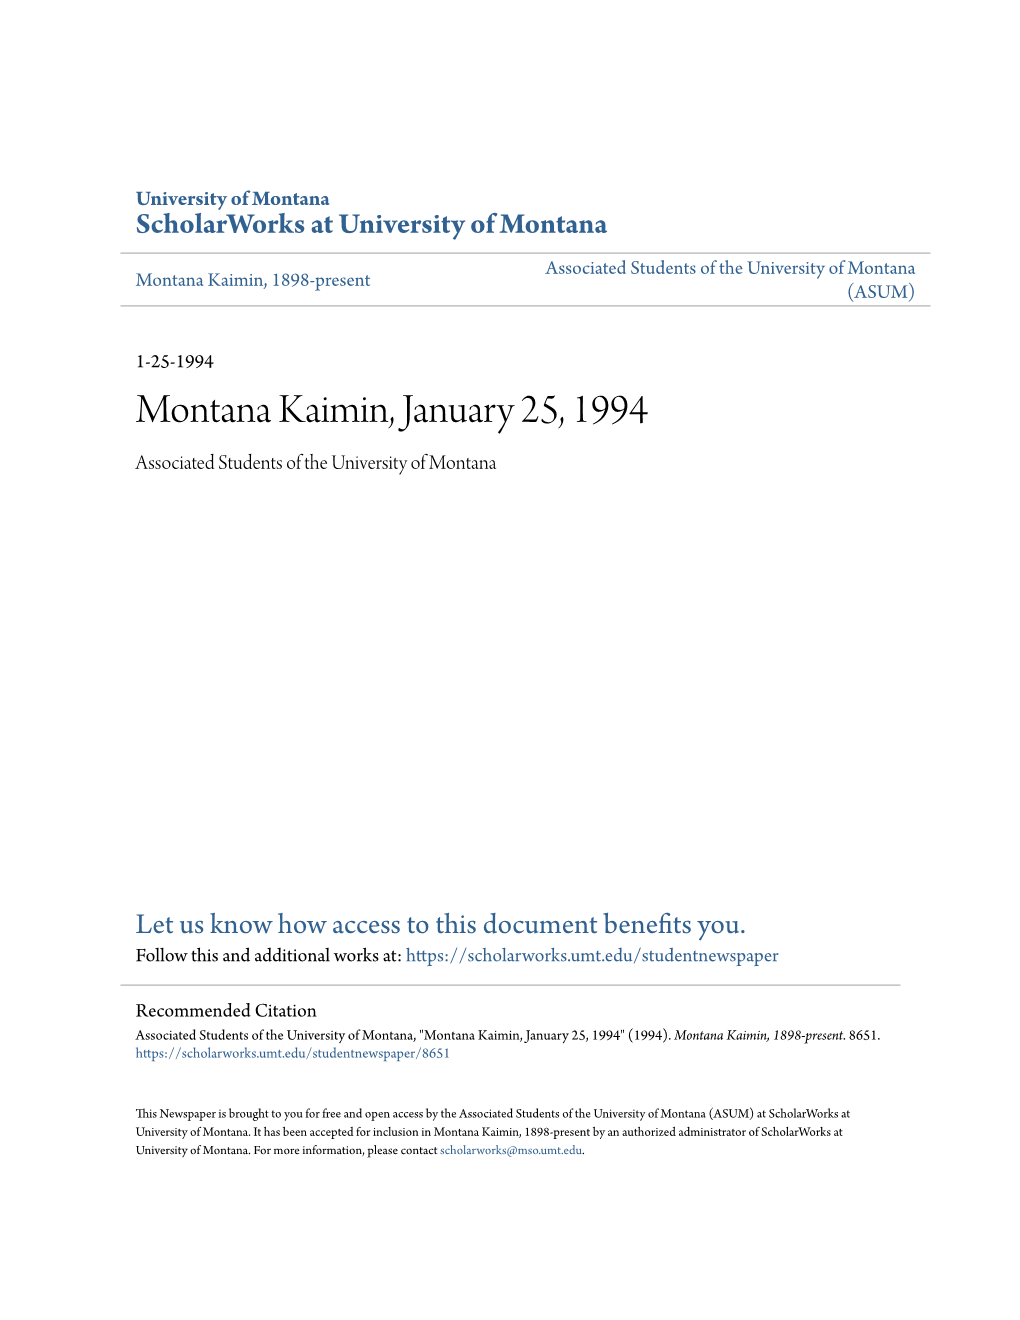 Montana Kaimin, January 25, 1994 Associated Students of the University of Montana